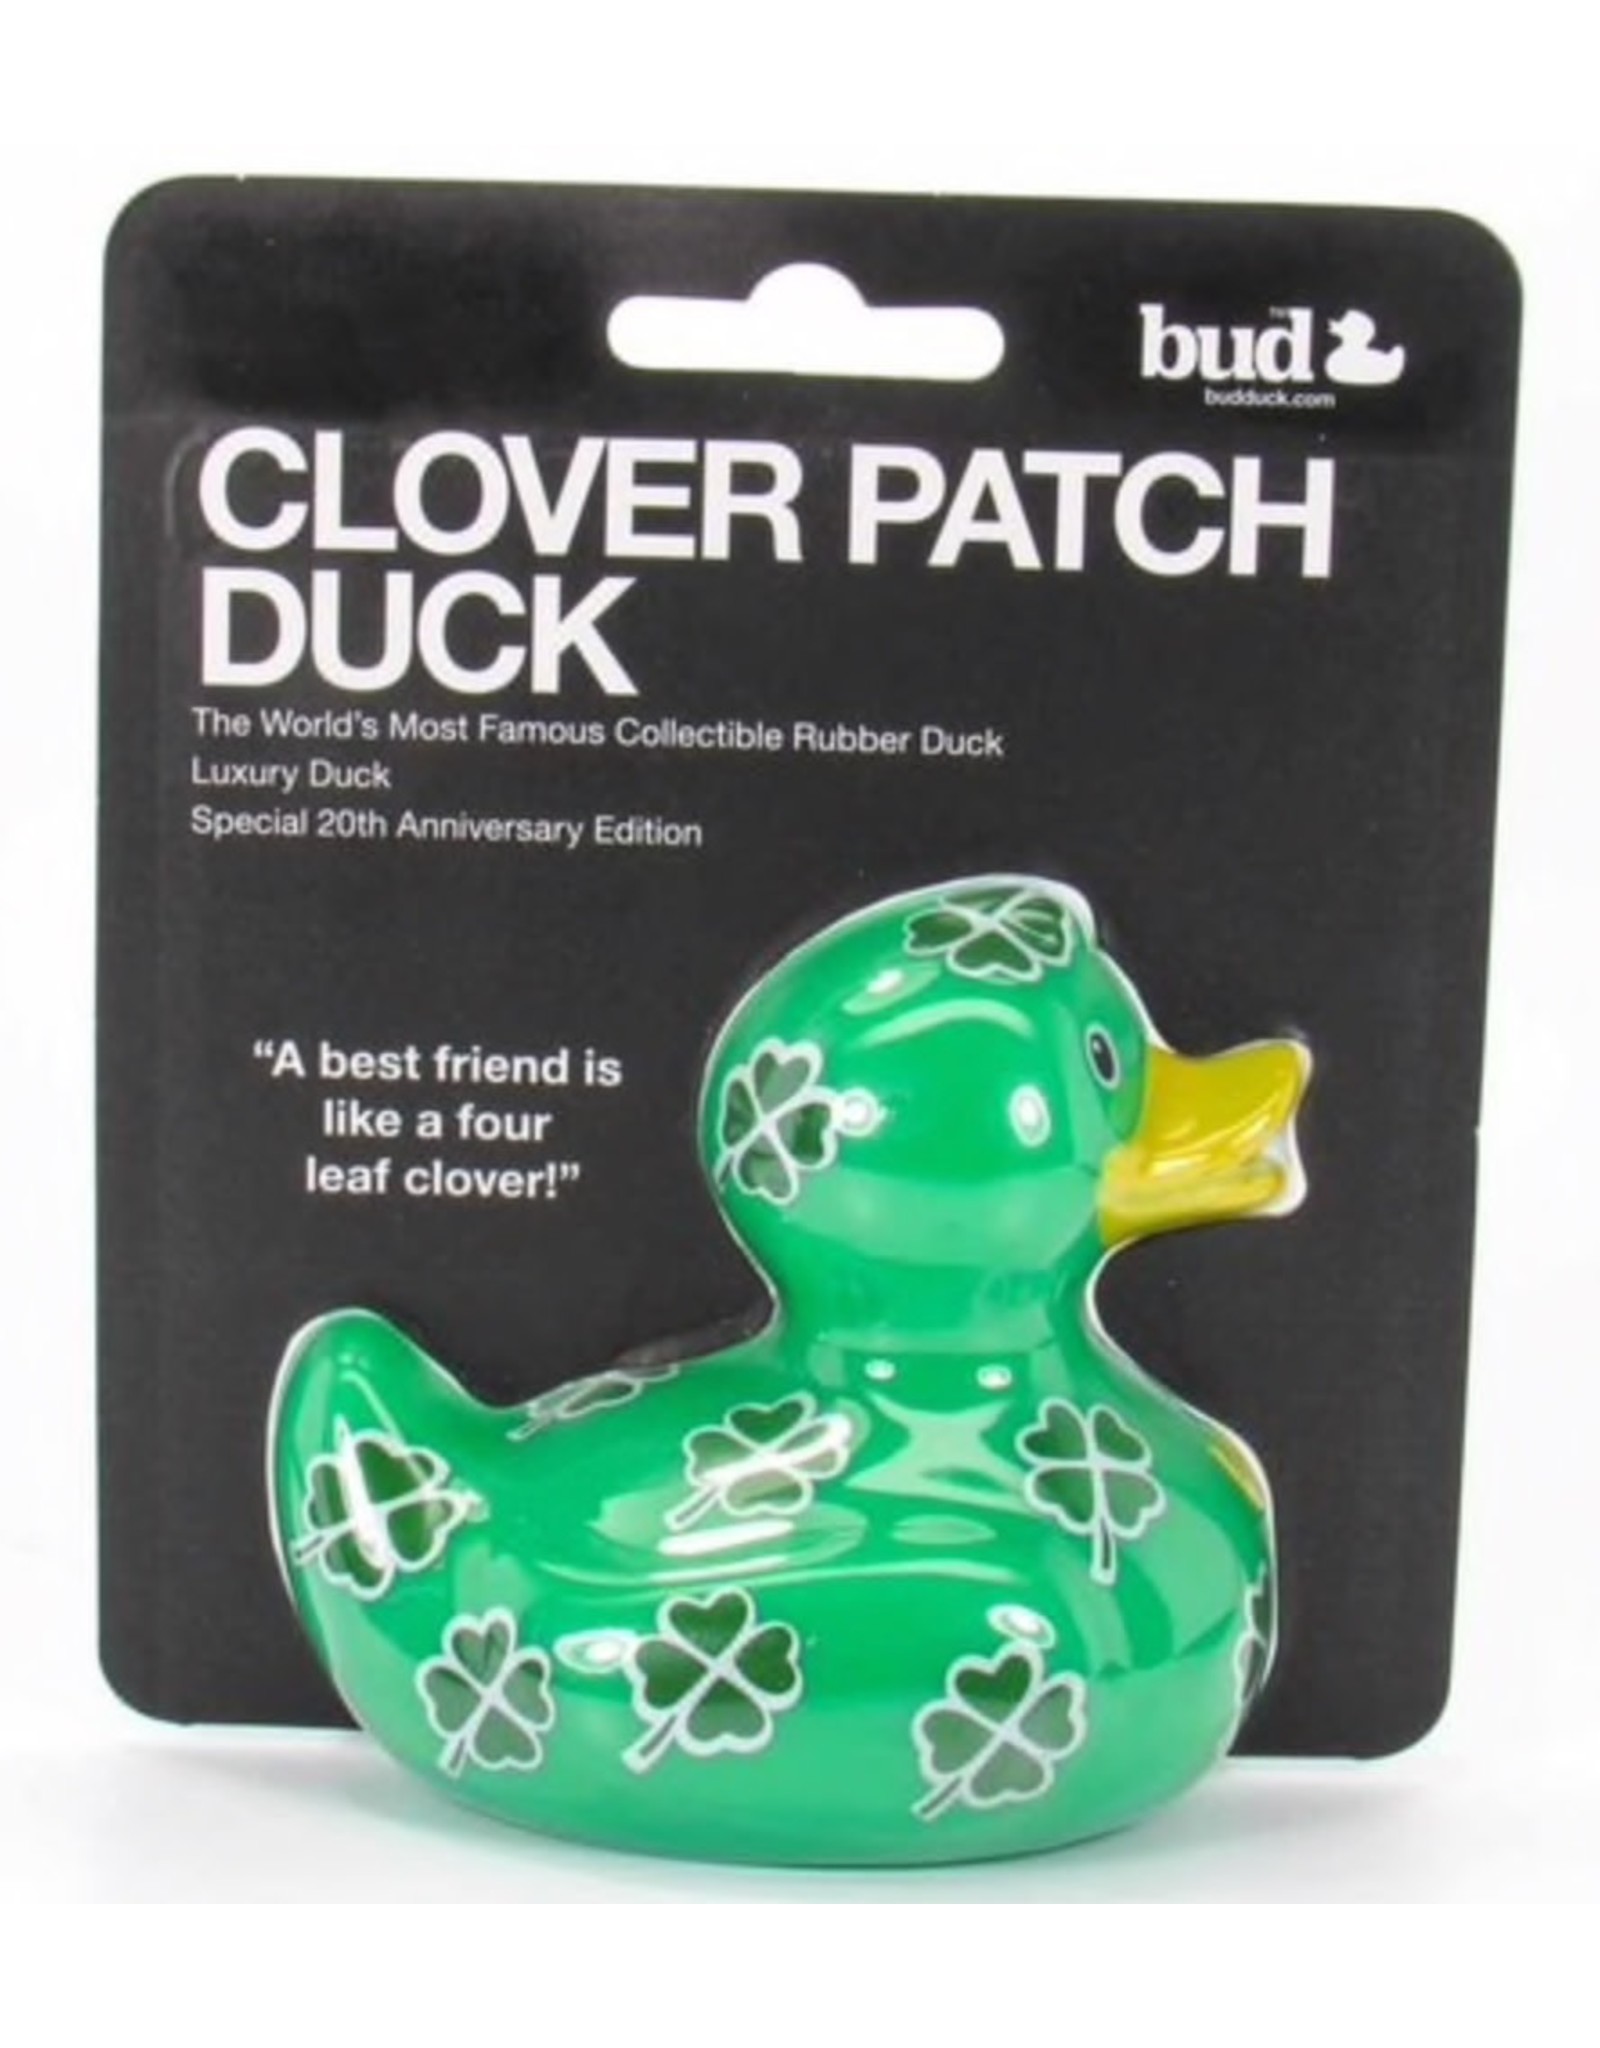 Clover Patch Rubber Duck